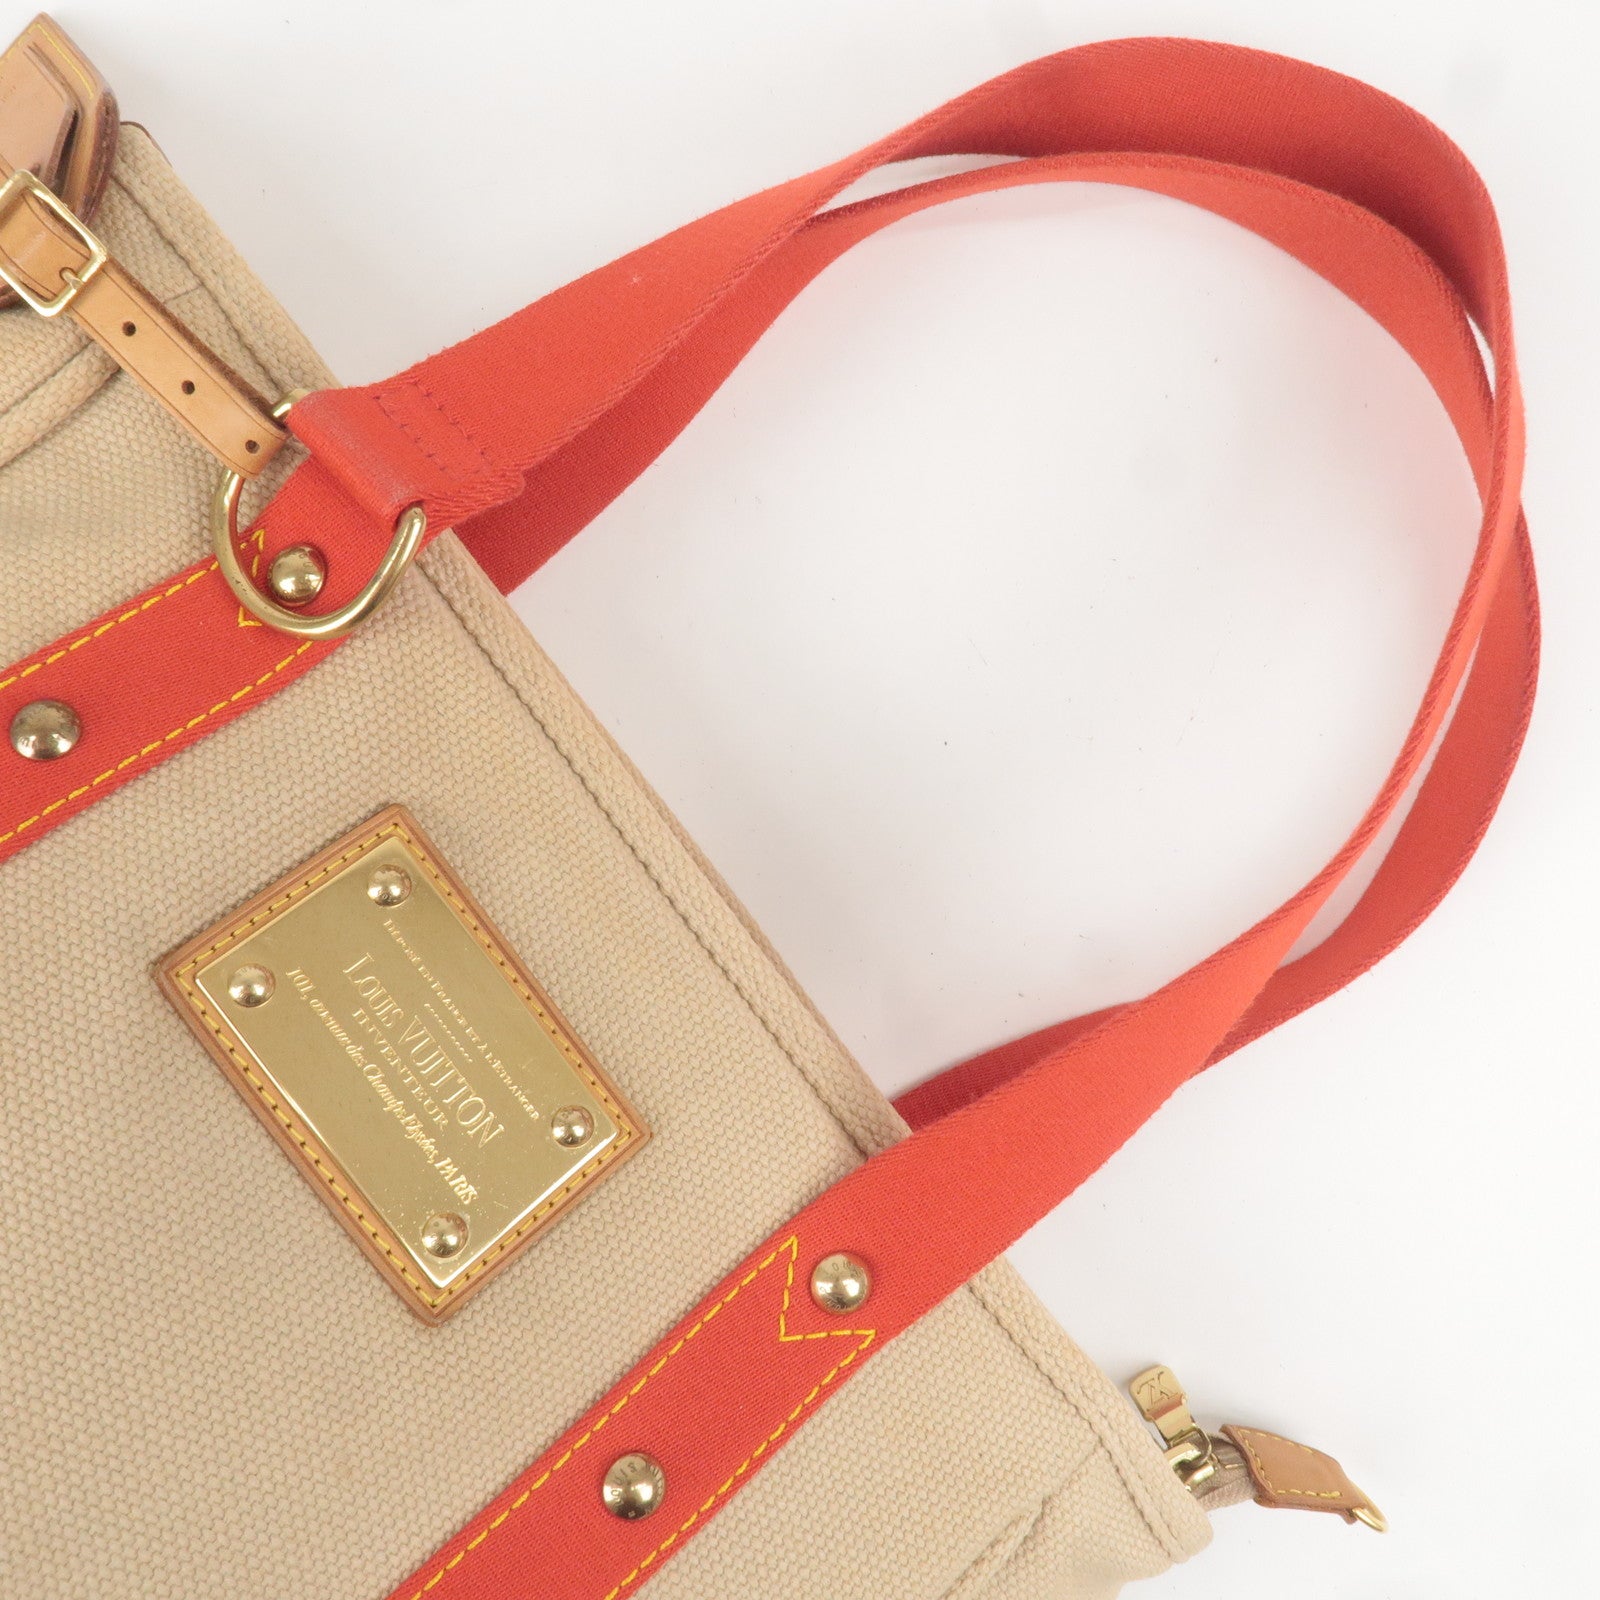 Louis-Vuitton-Antigua-Cabas-MM-Tote-Bag-Hand-Bag-M40035 – dct-ep_vintage  luxury Store